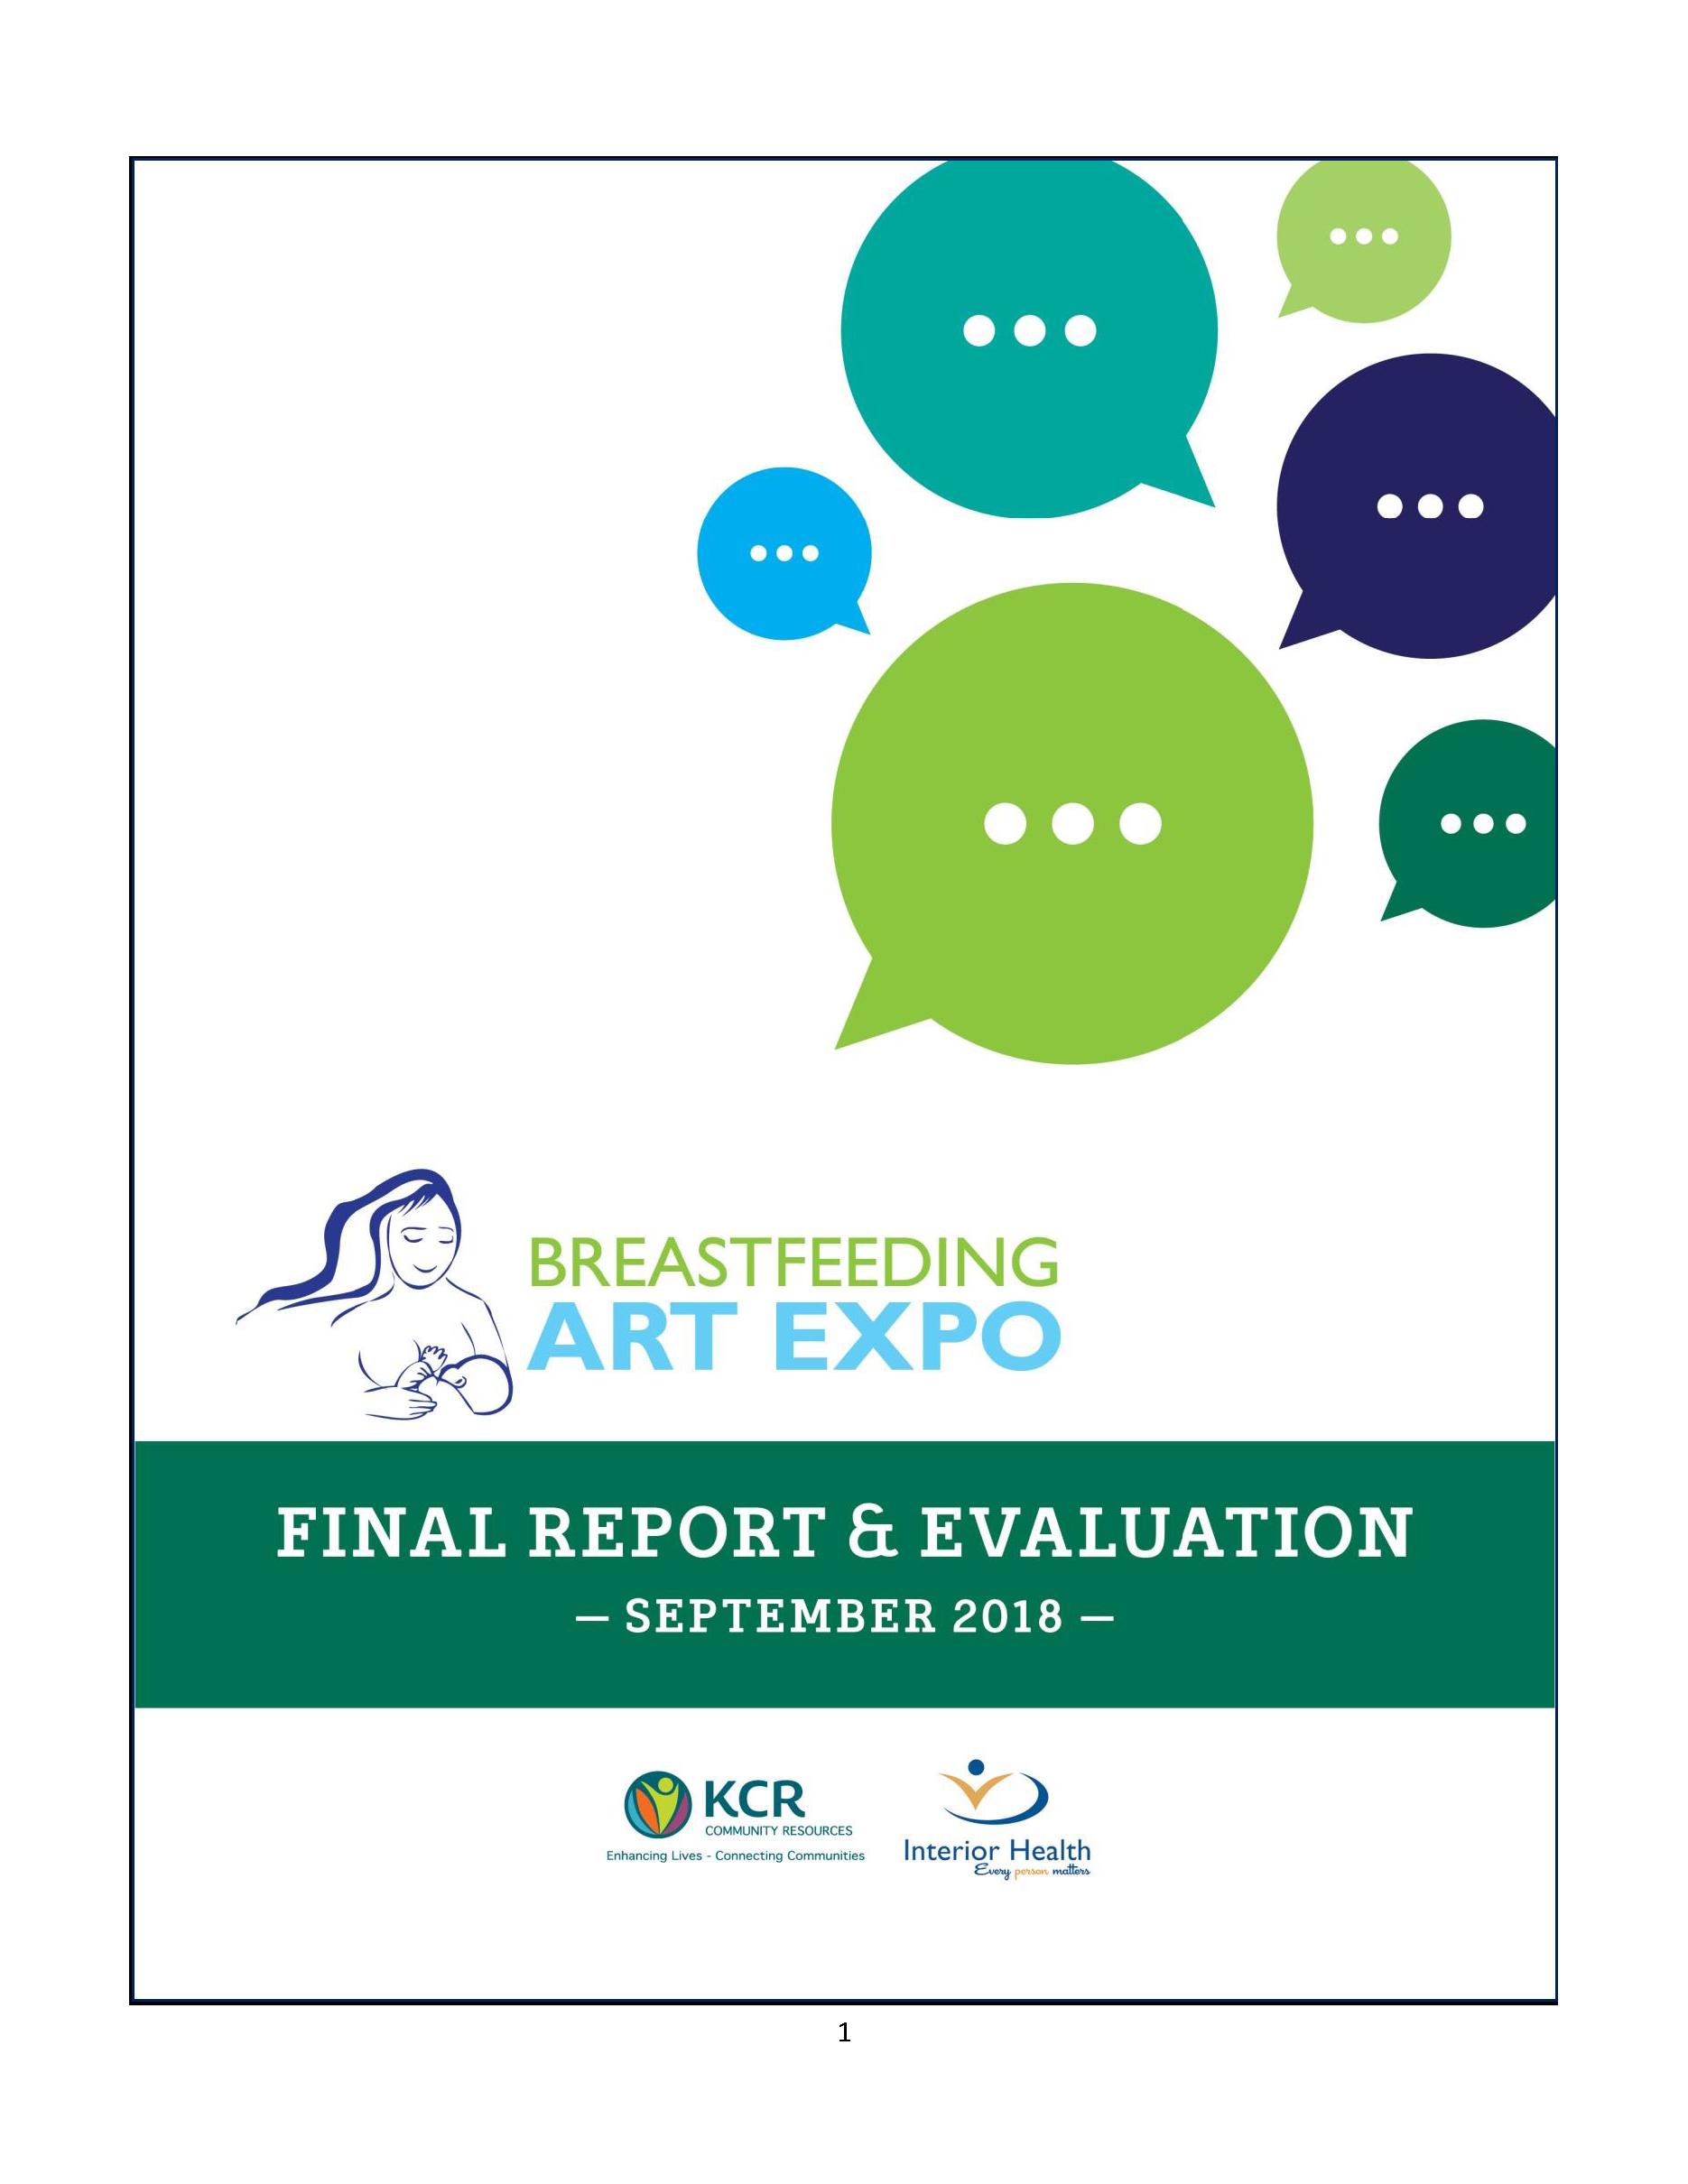 Breastfeeding Art Expo - Final Report & Evaluation